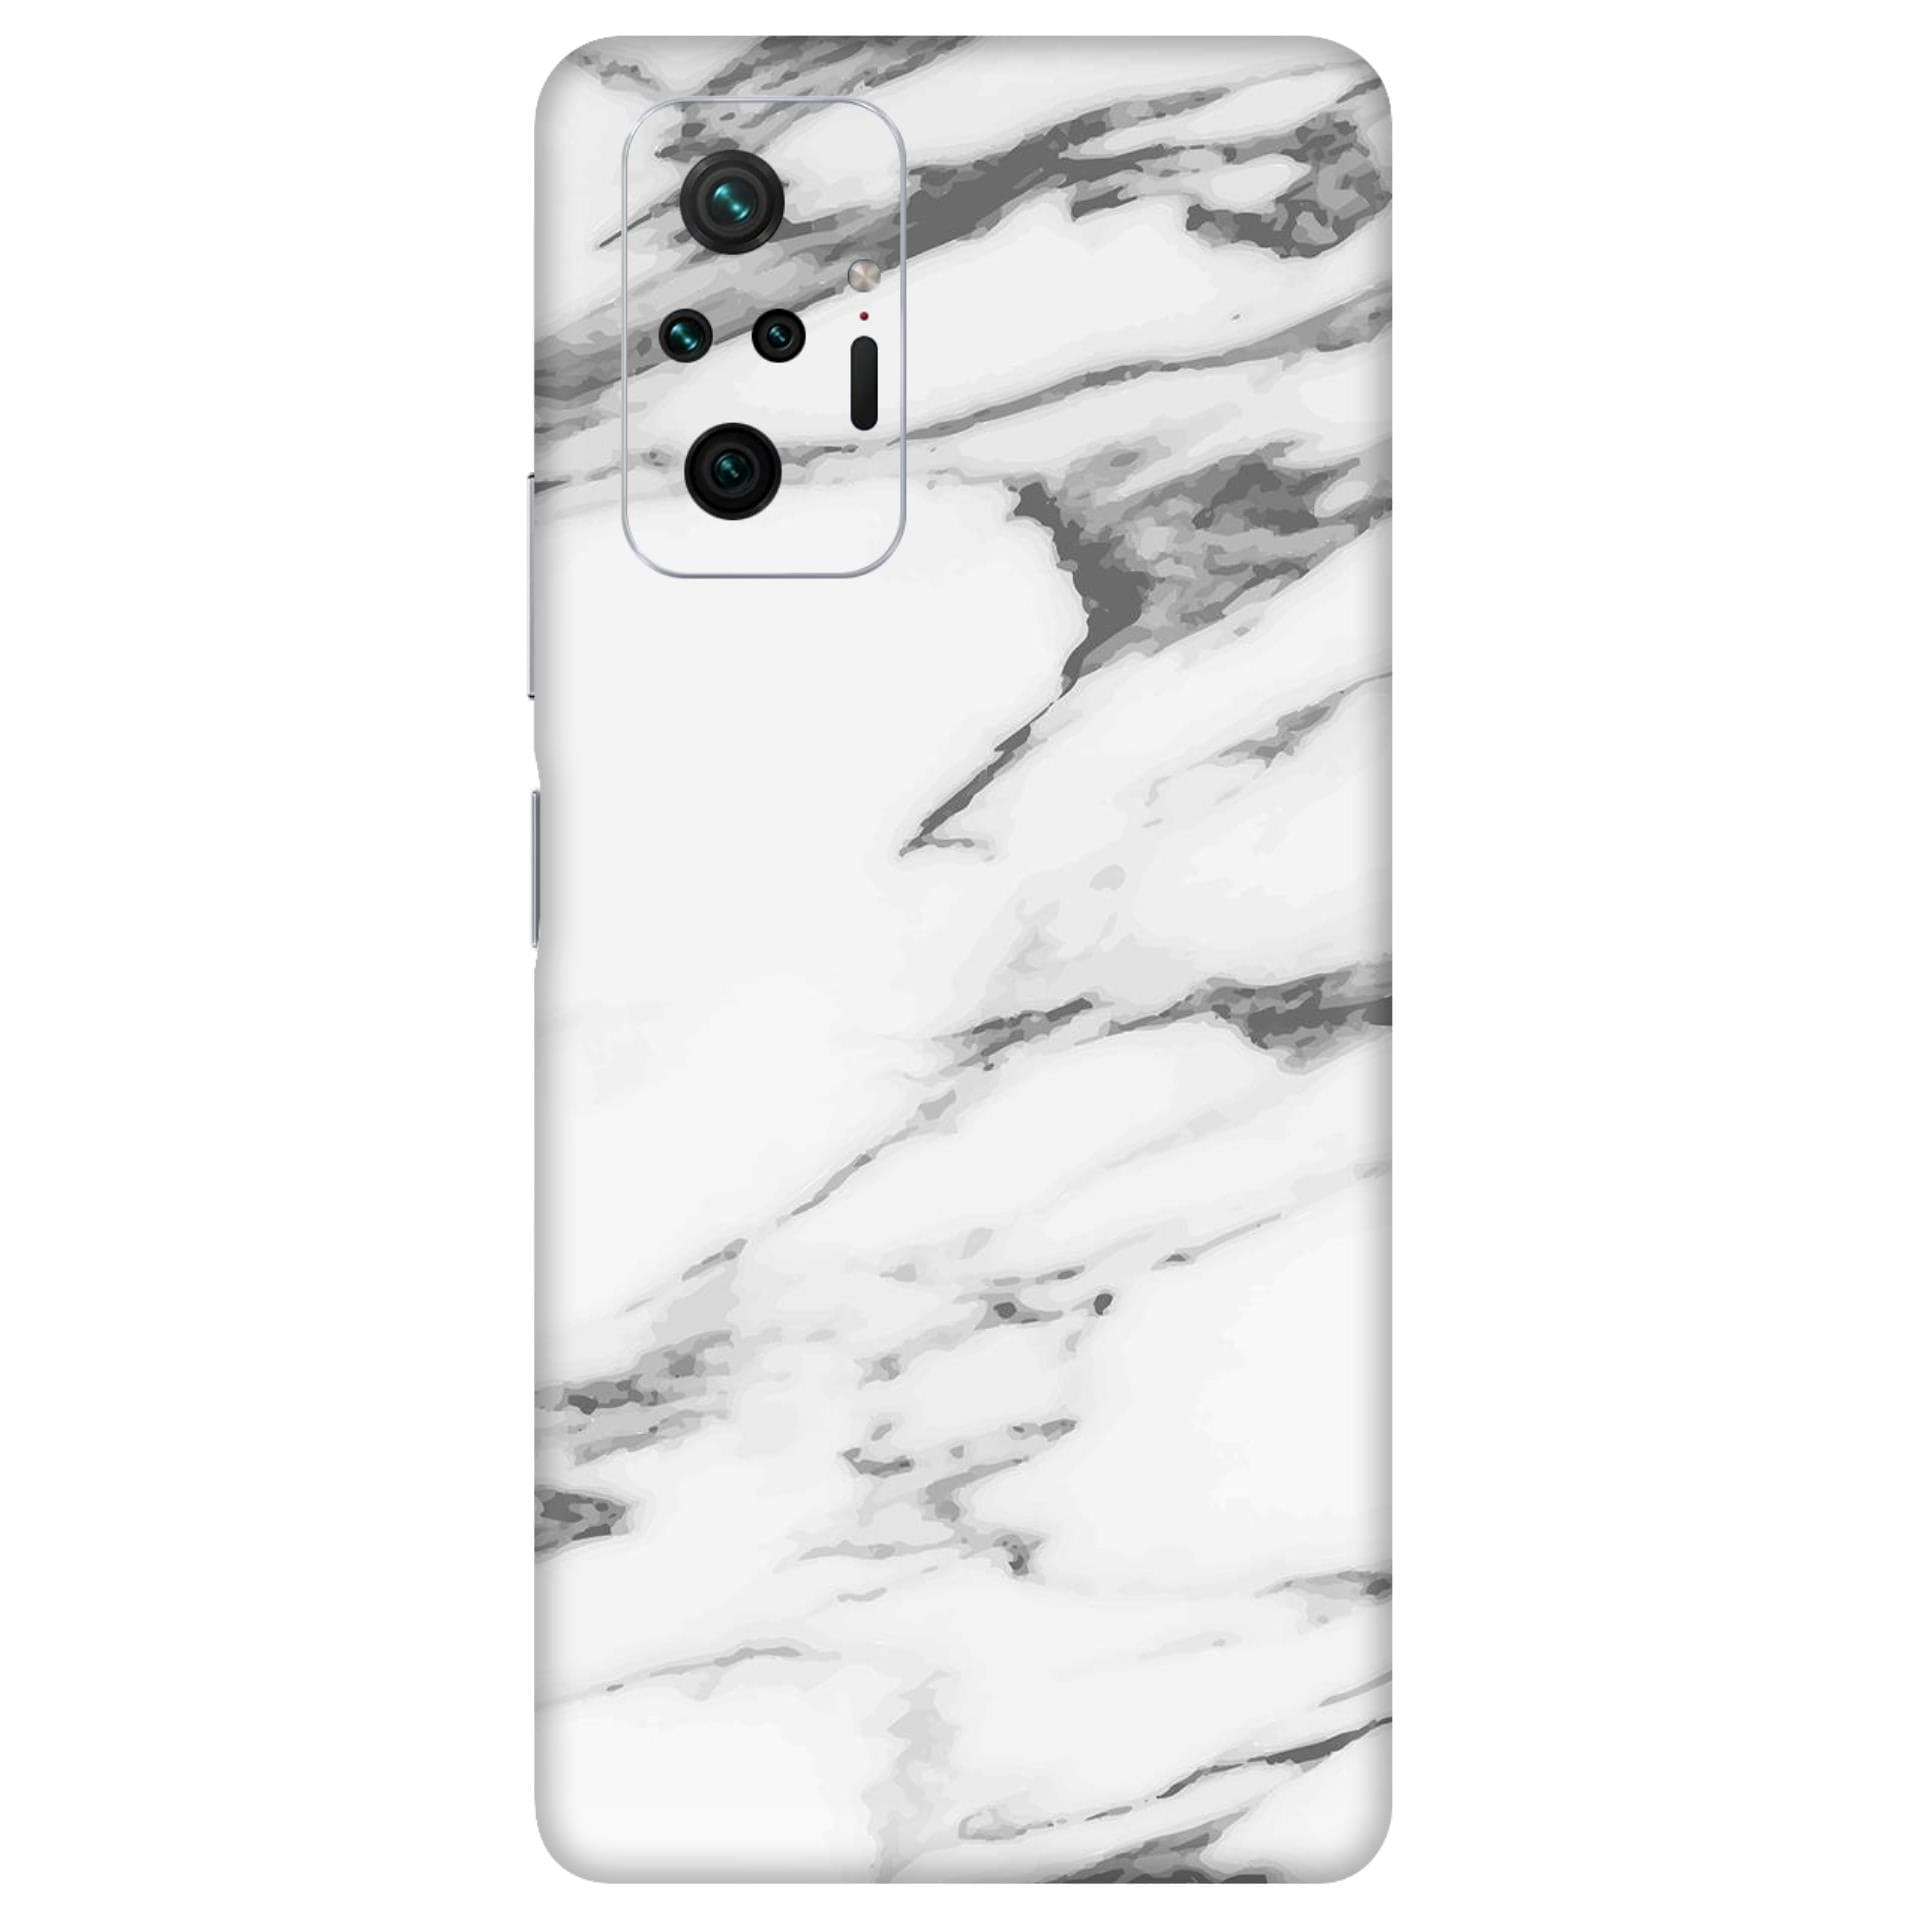 Redmi Note 10 Pro White Marble skins